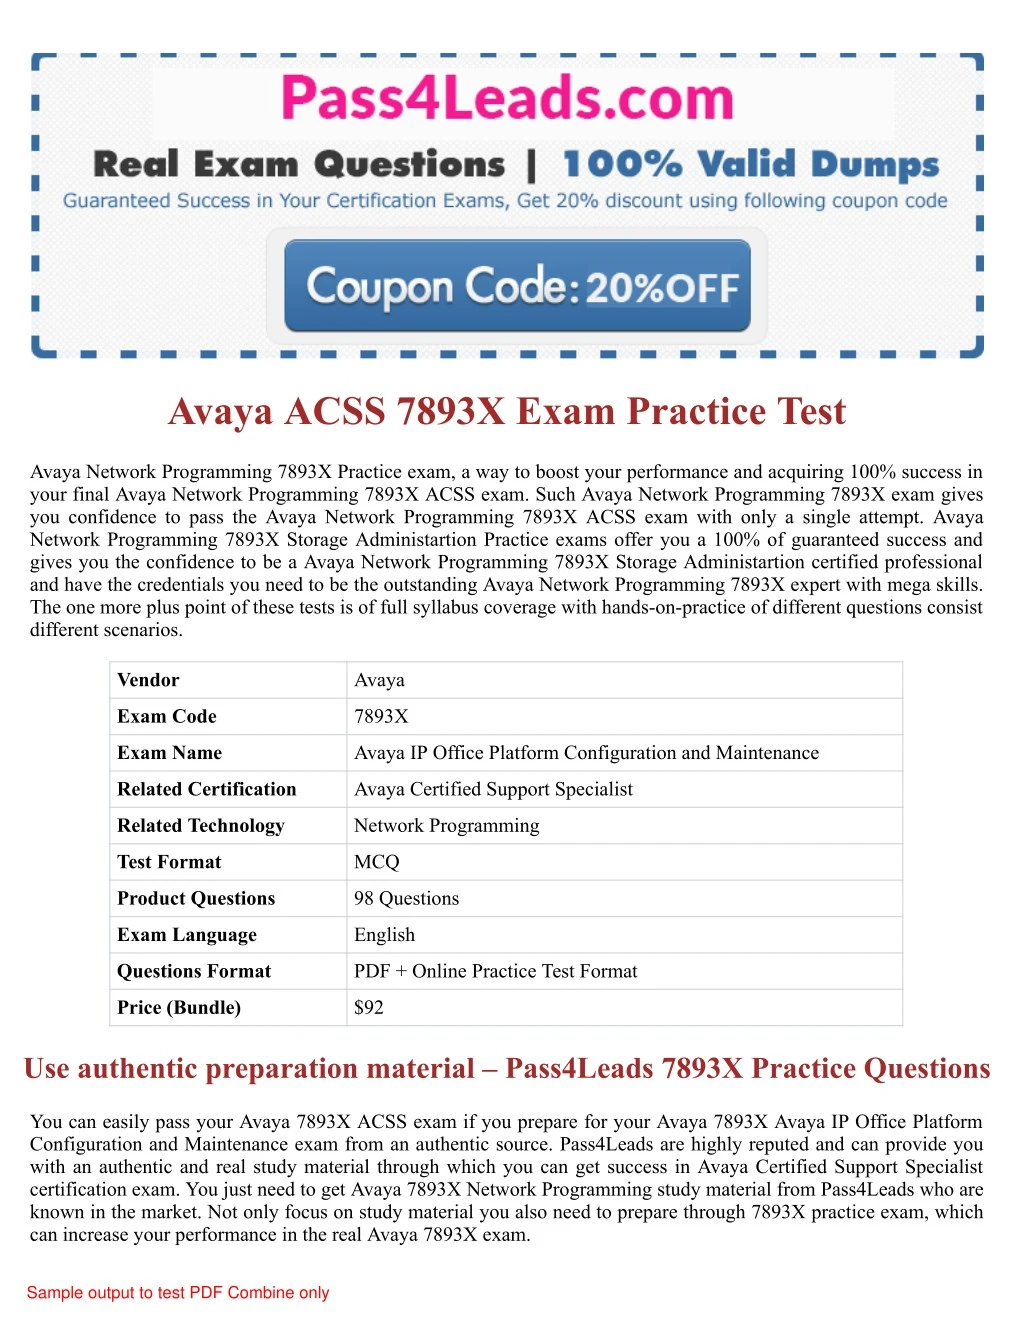 avaya acss 7893x exam practice test